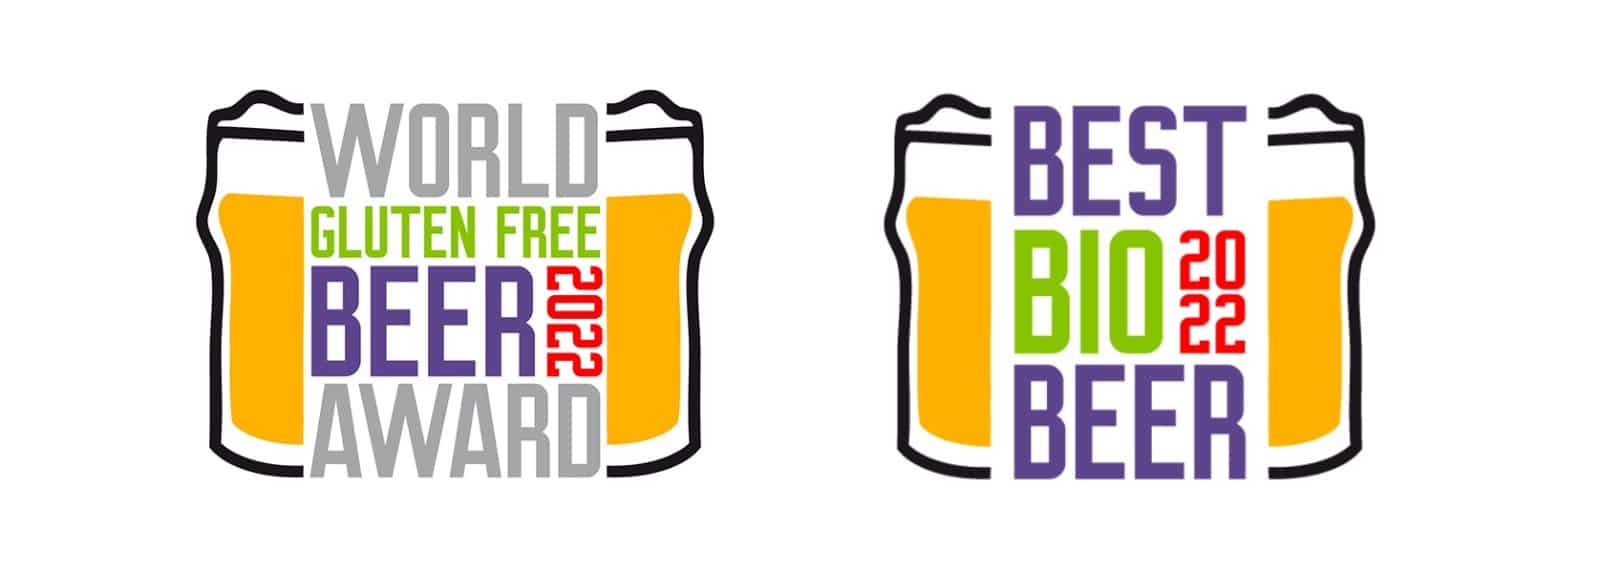 Unionbirrai World Gluten Free Beer Award